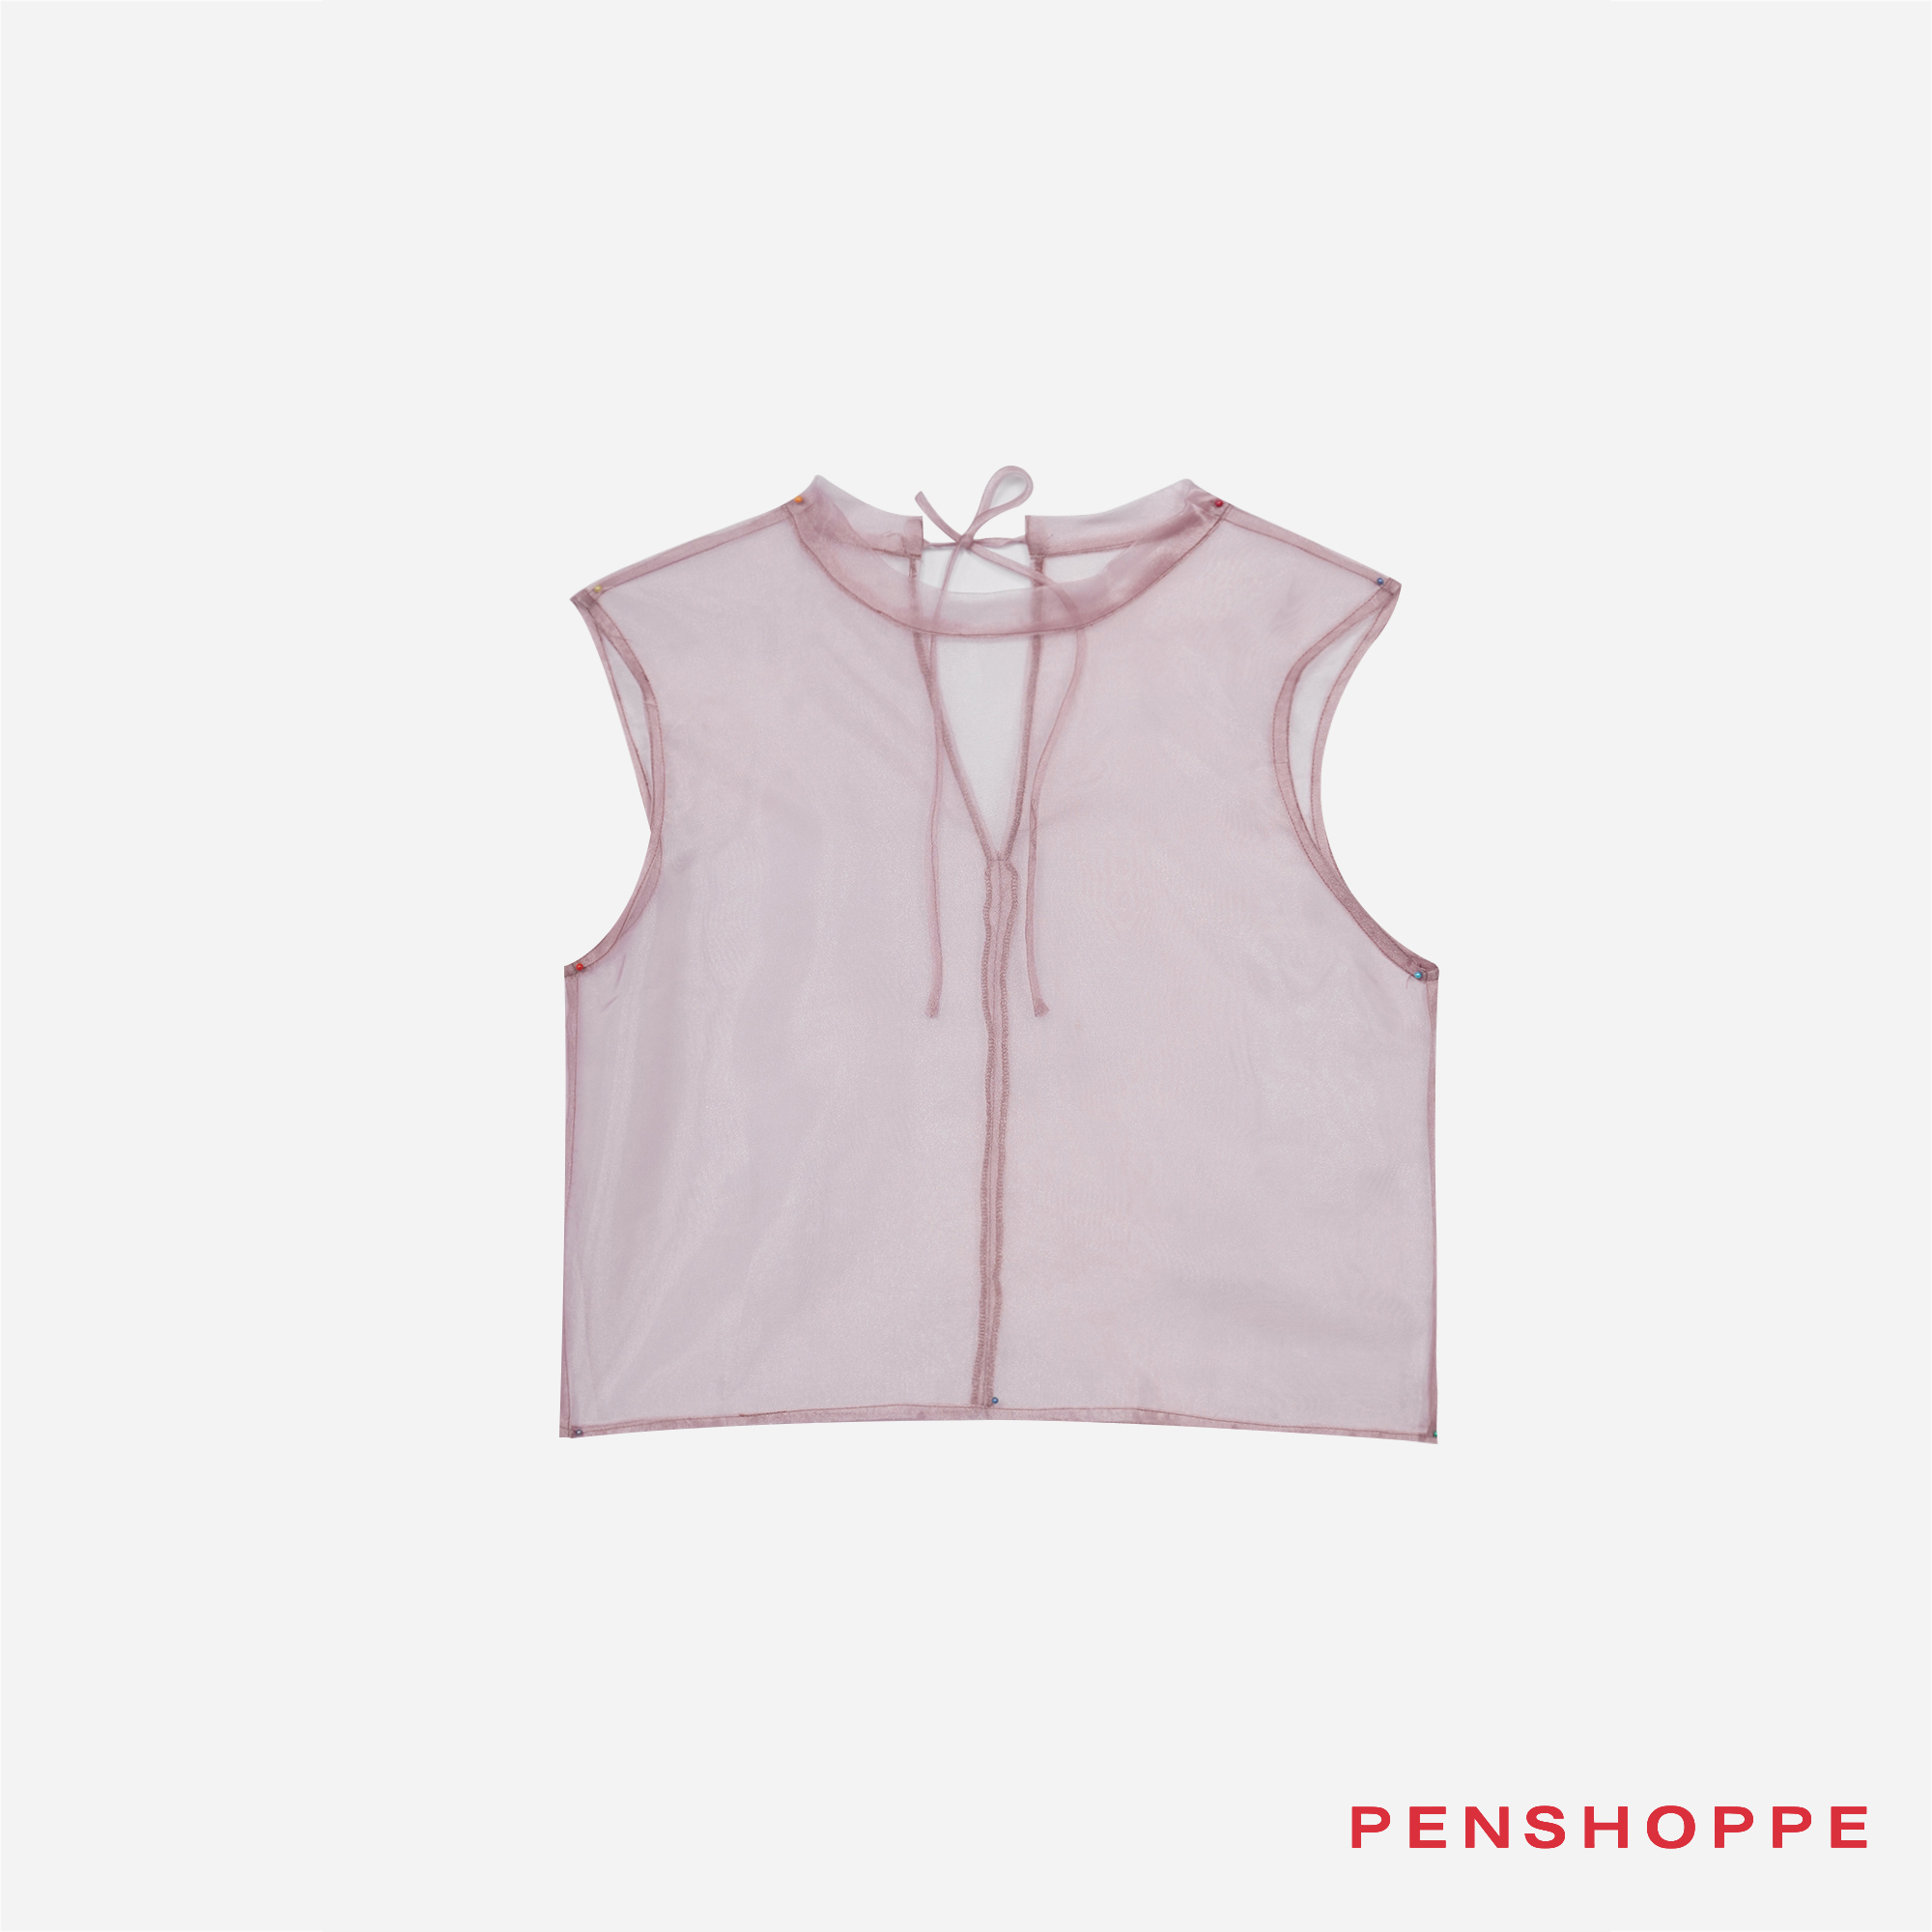 Penshoppe Relaxed Fit Sheer Top With Inner For Women (Black/White)